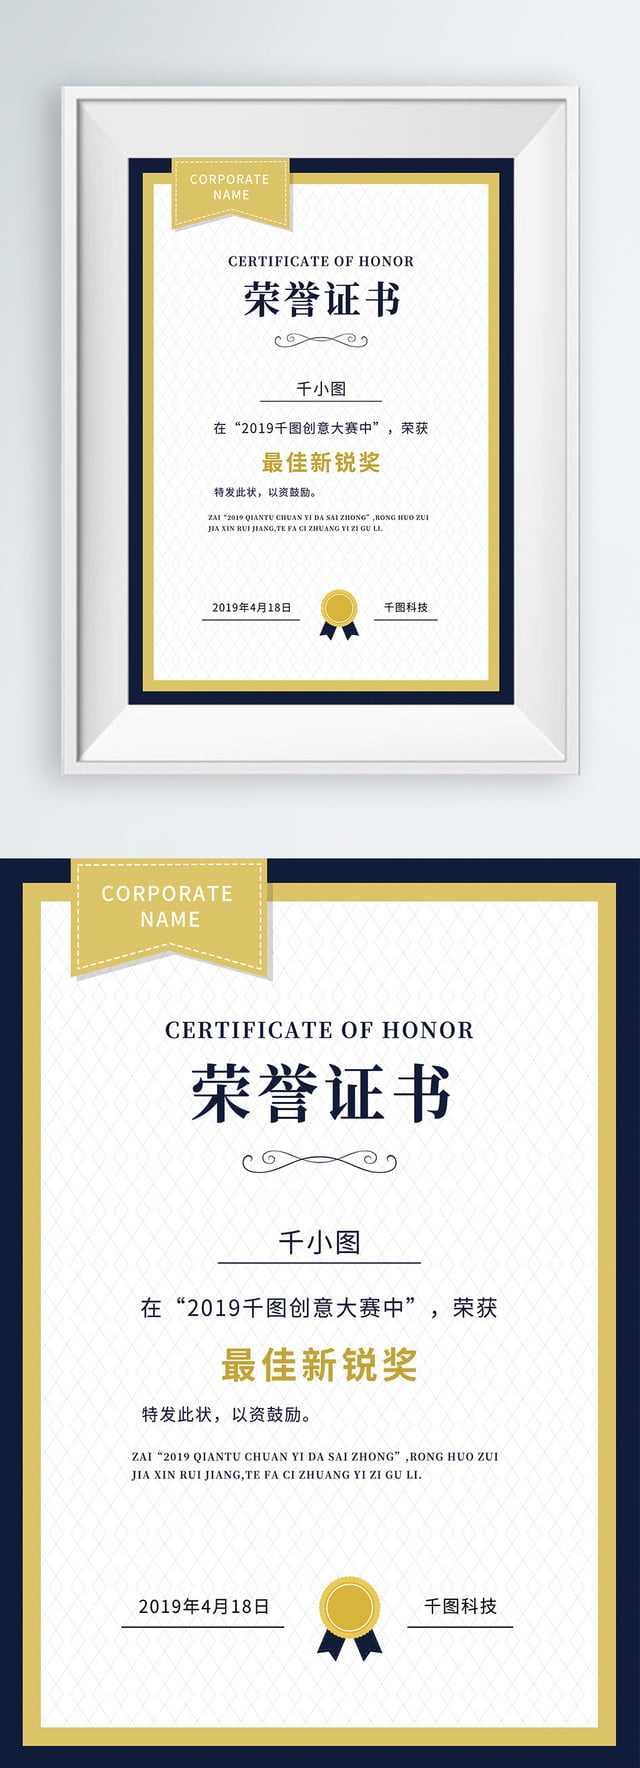 Certificate Authorization Certificate Certificate Of Honor Within Certificate Of Authorization Template